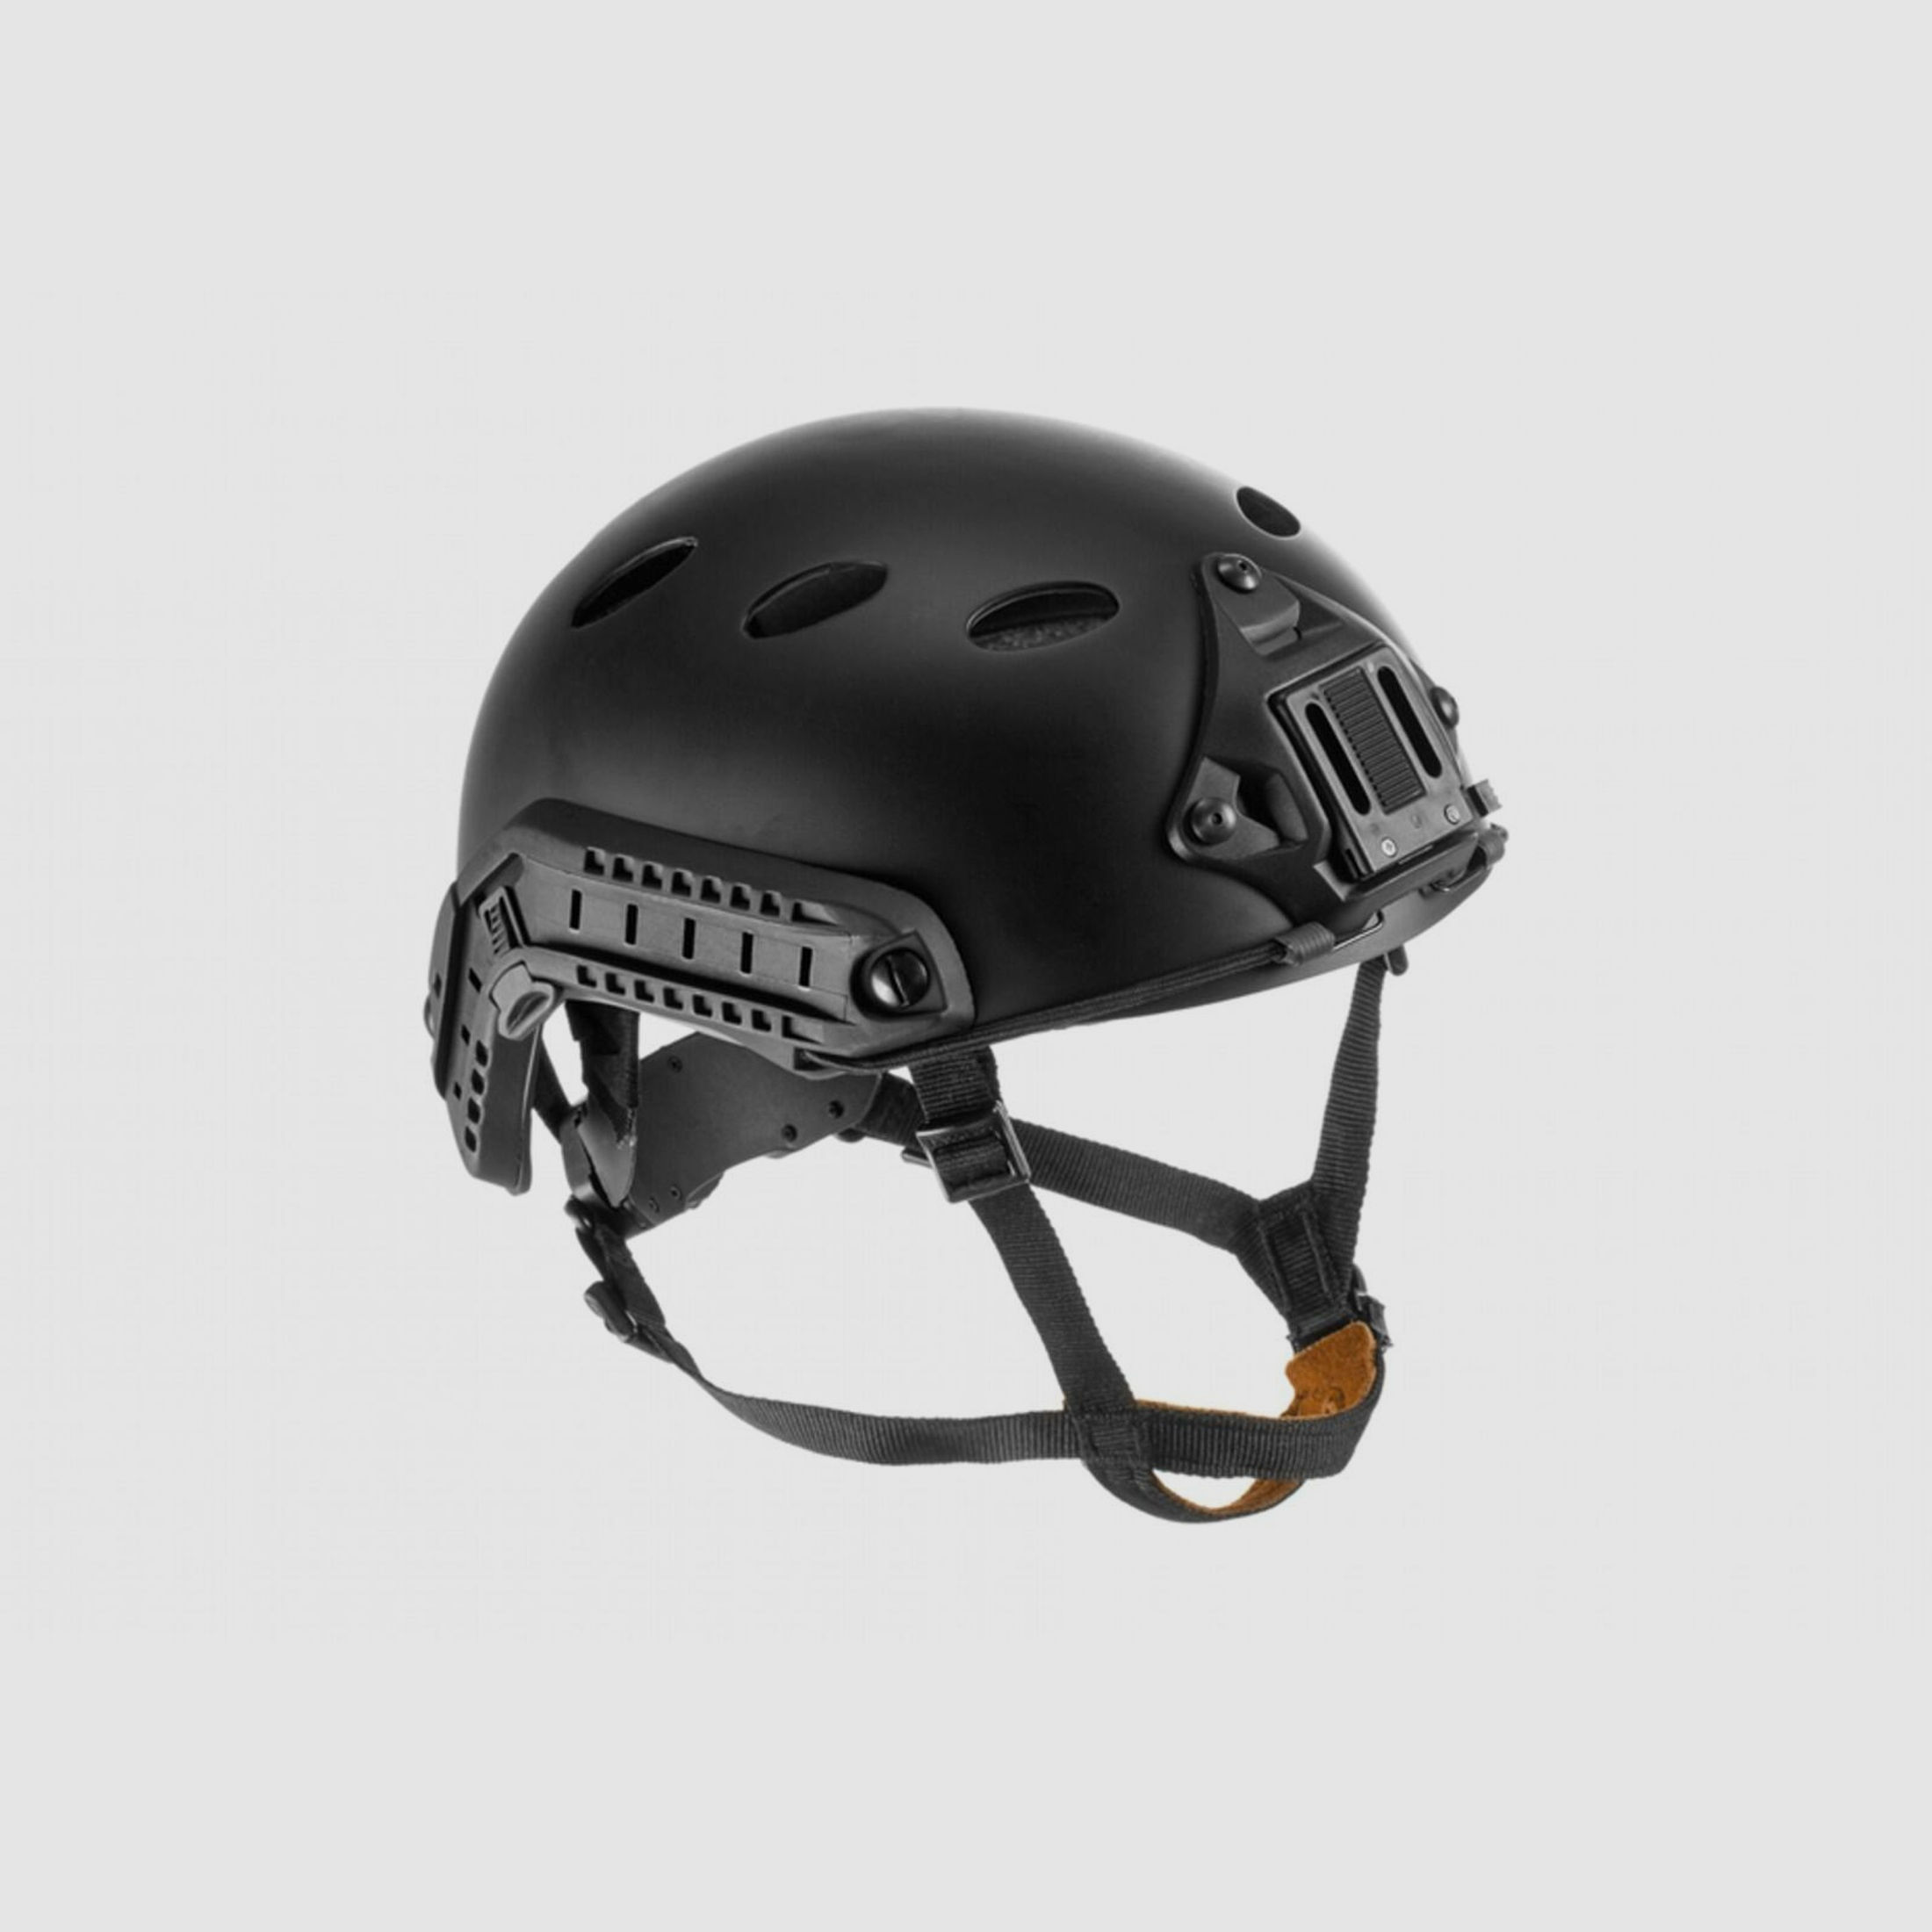 FMA FAST Helmet PJ Carbon Fiber Version-Schwarz-M/L